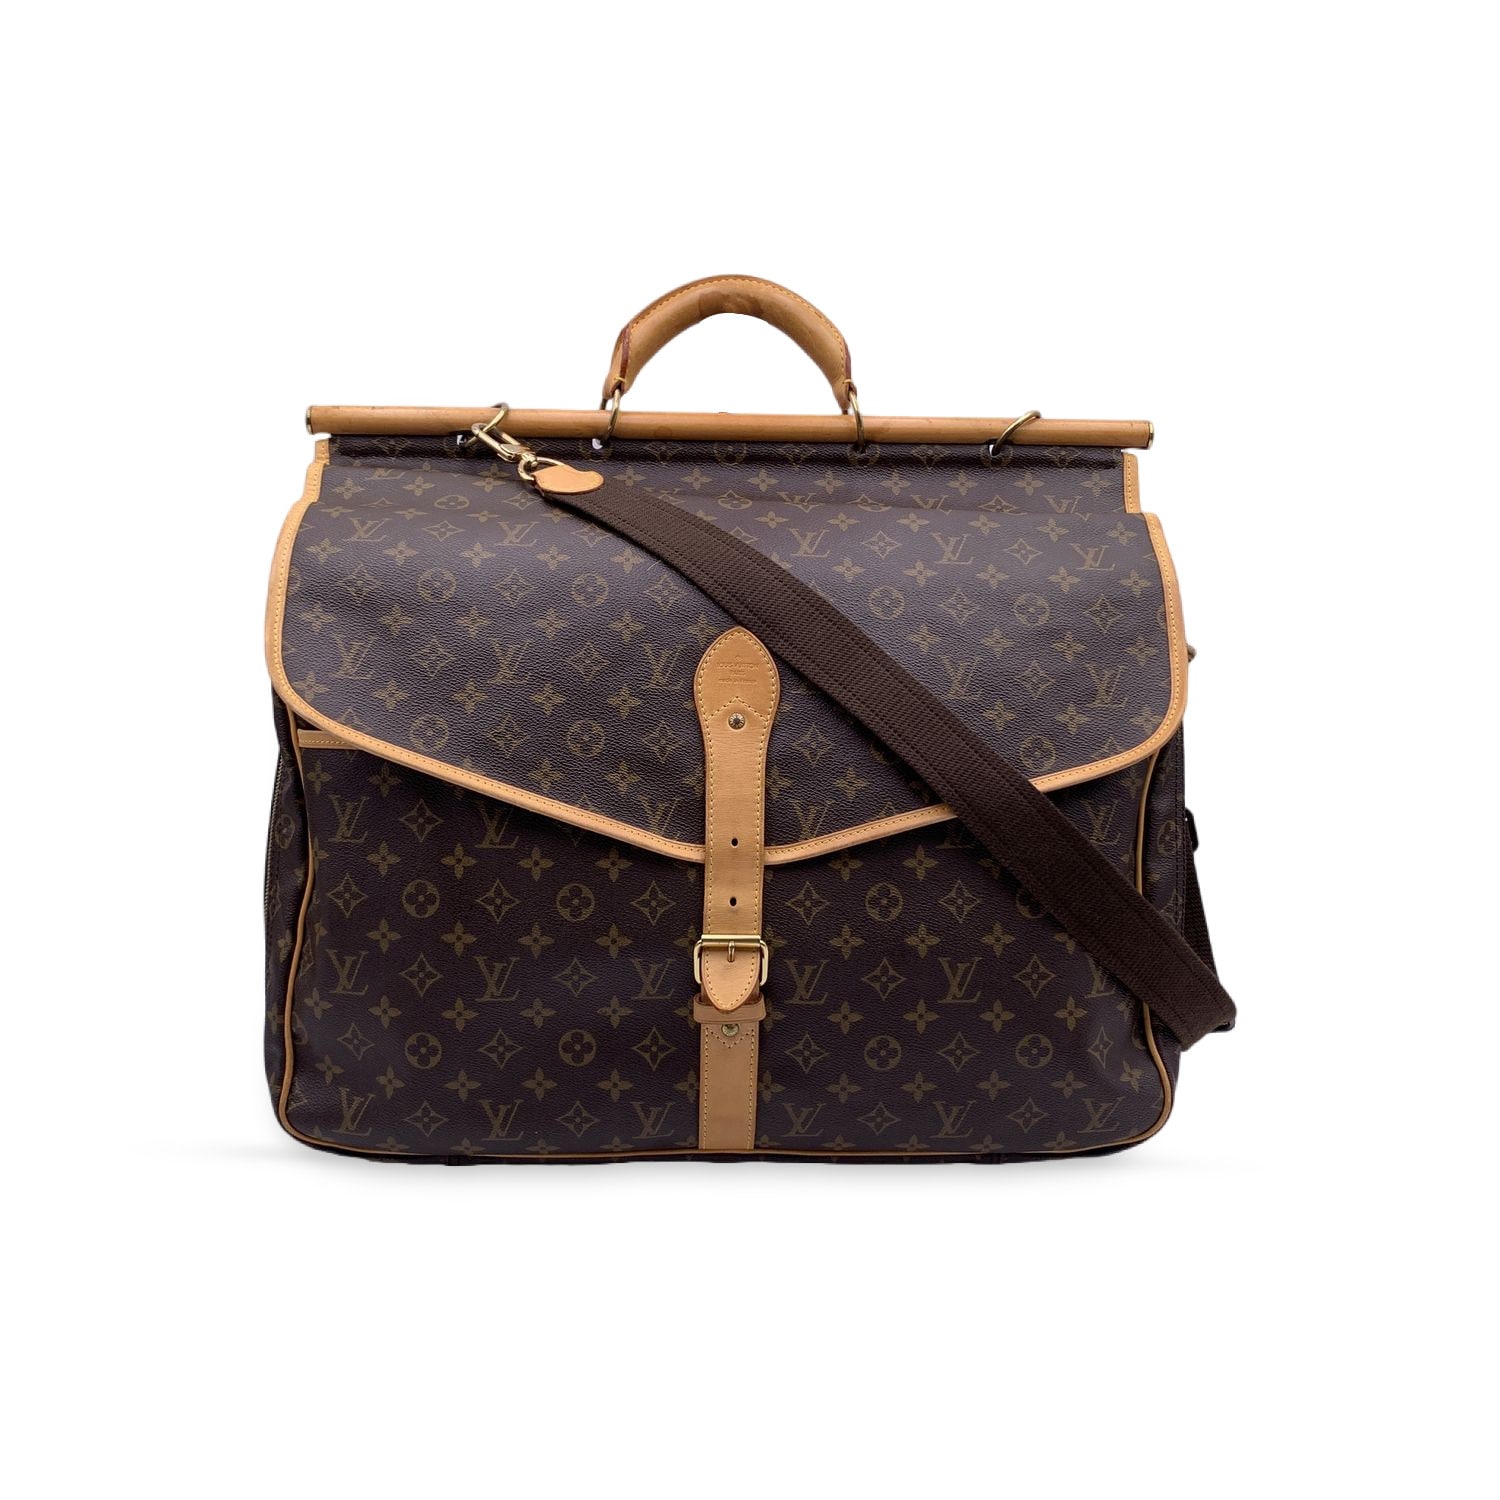 Brand new Louis Vuitton monogram suit carrier - Pinth Vintage Luggage